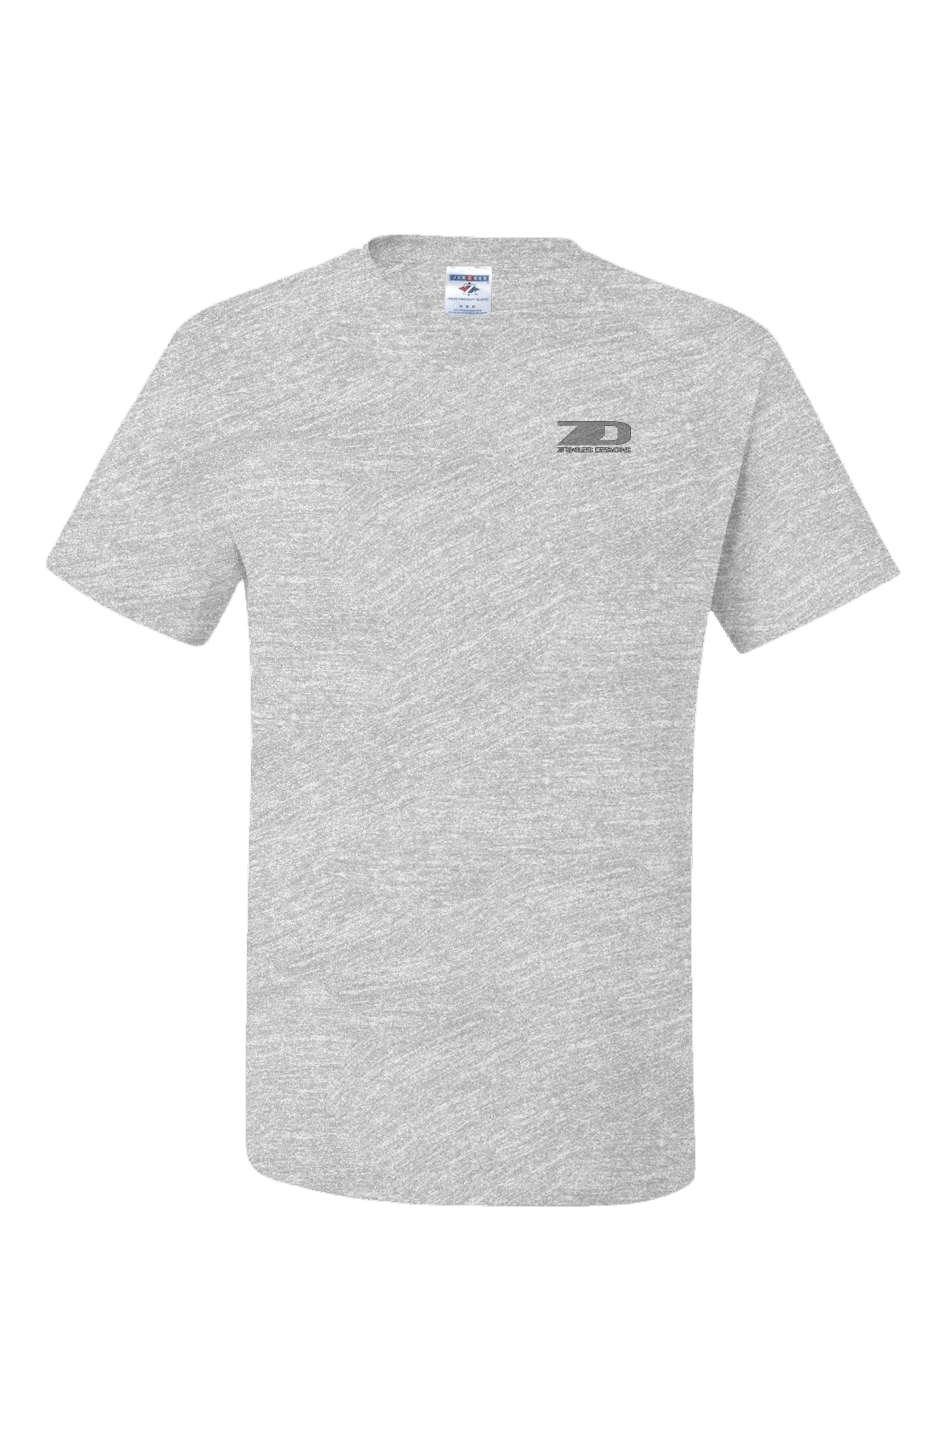 Zawles Designs Athletic Dri-Power T-Shirt